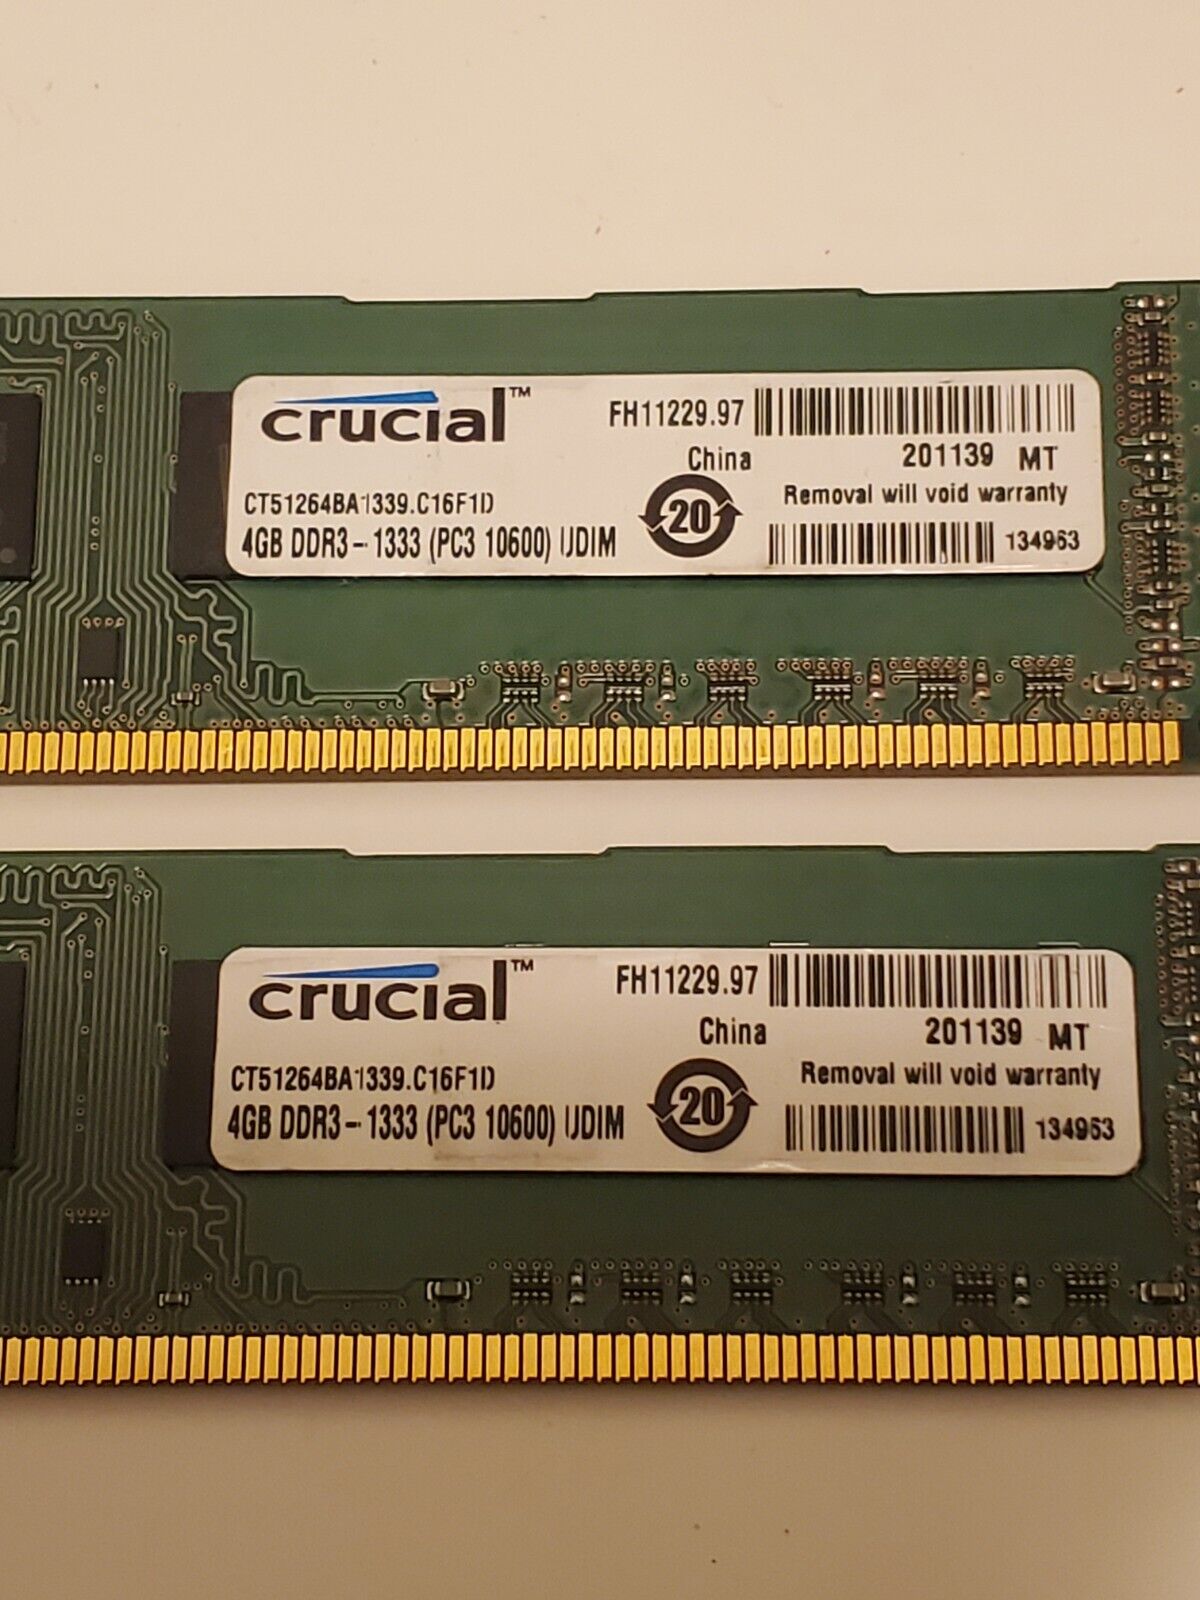 Crucial 8GB Kit (4GB x 2Pcs) DDR3 1333 MHz (PC3 10600) Desktop Memory - CT51264BA1339.D16FER2